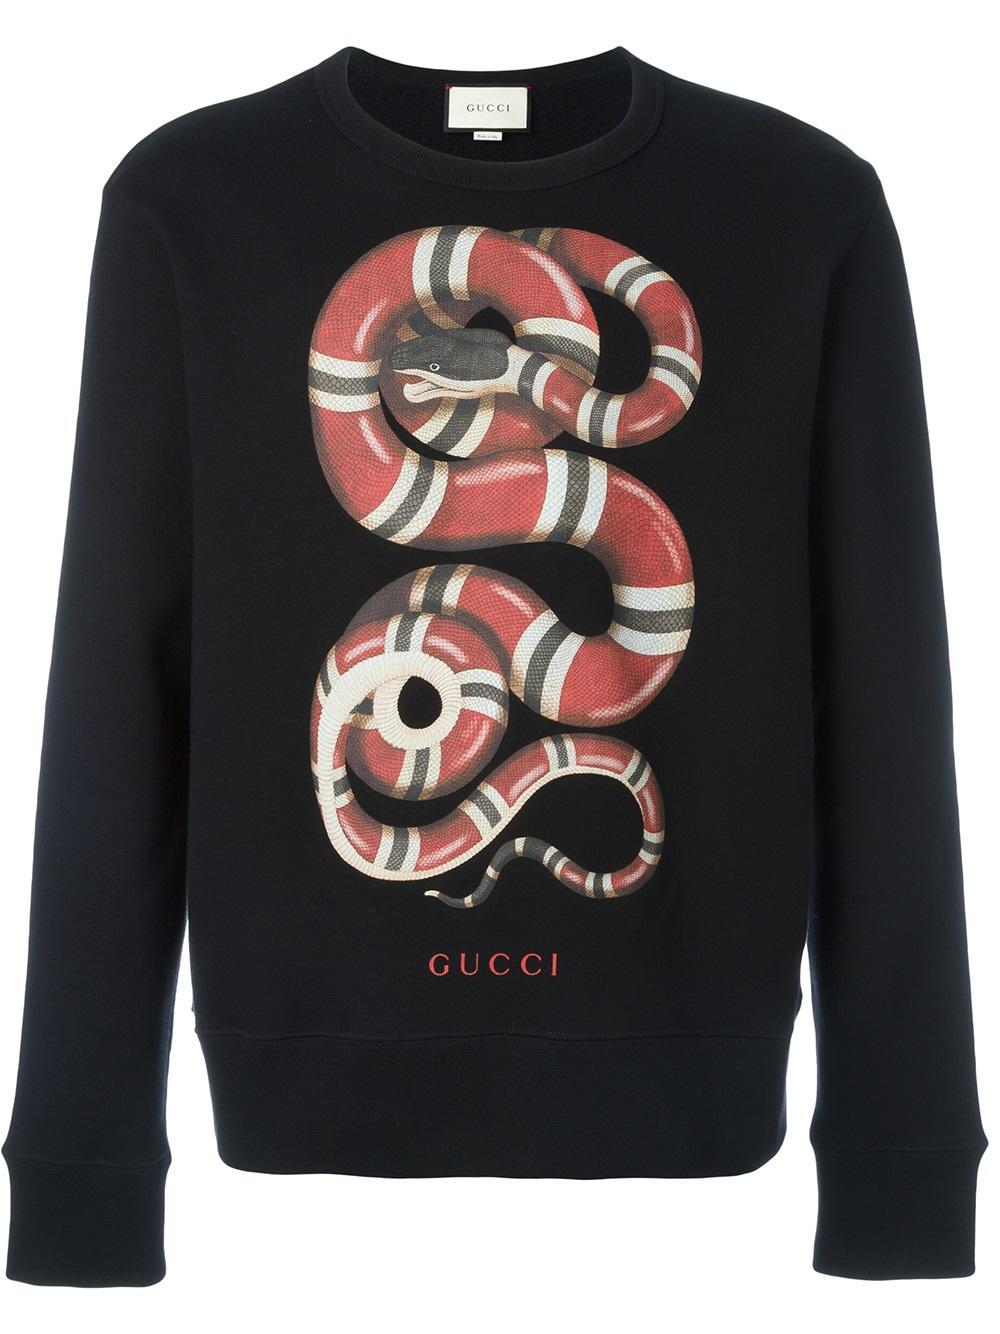 Lyst - Gucci - Snake Print Sweatshirt - Men - Cotton - Xl in Black for Men